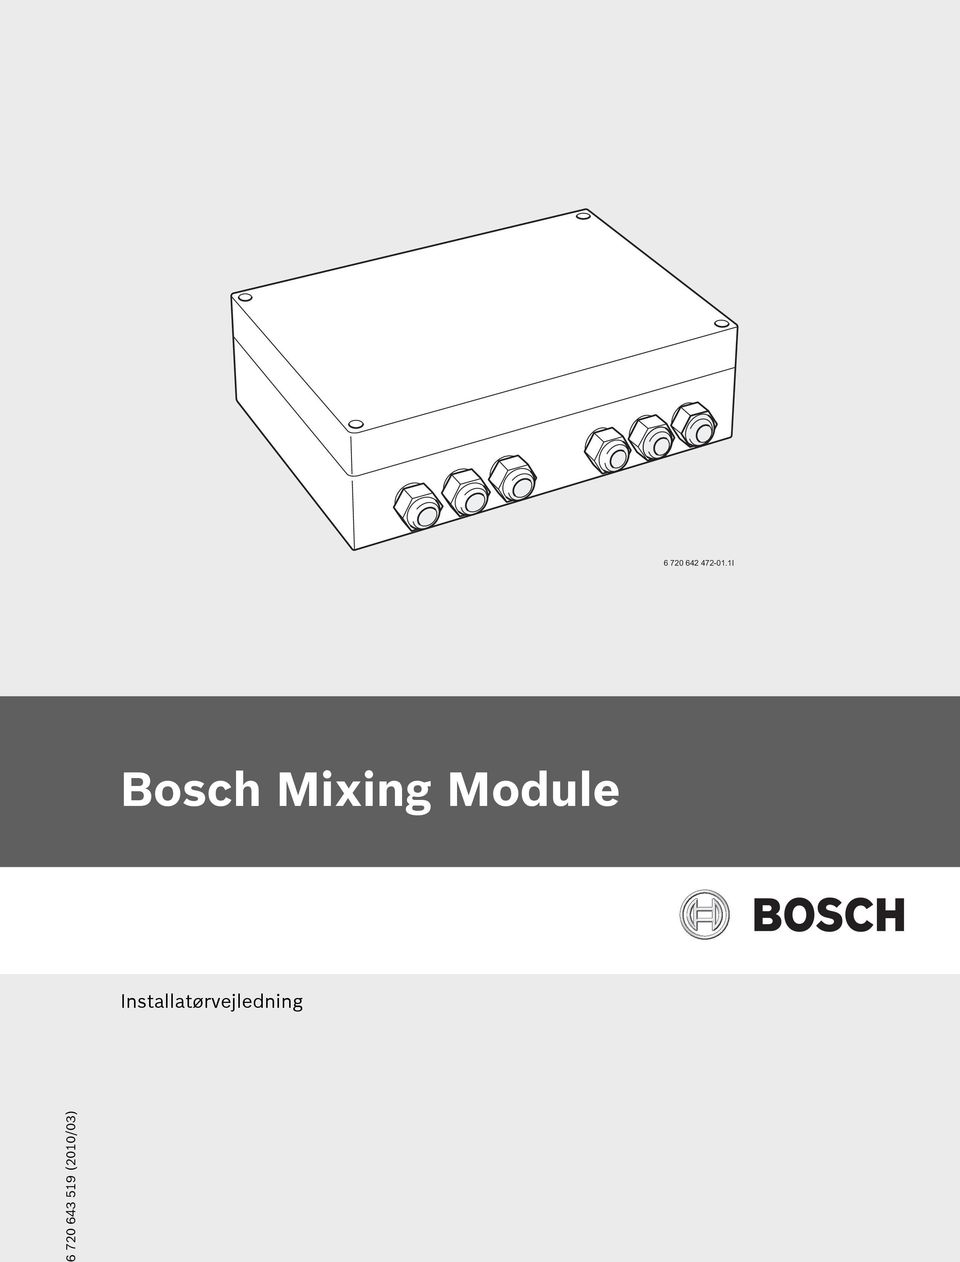 1I Bosch Mixing